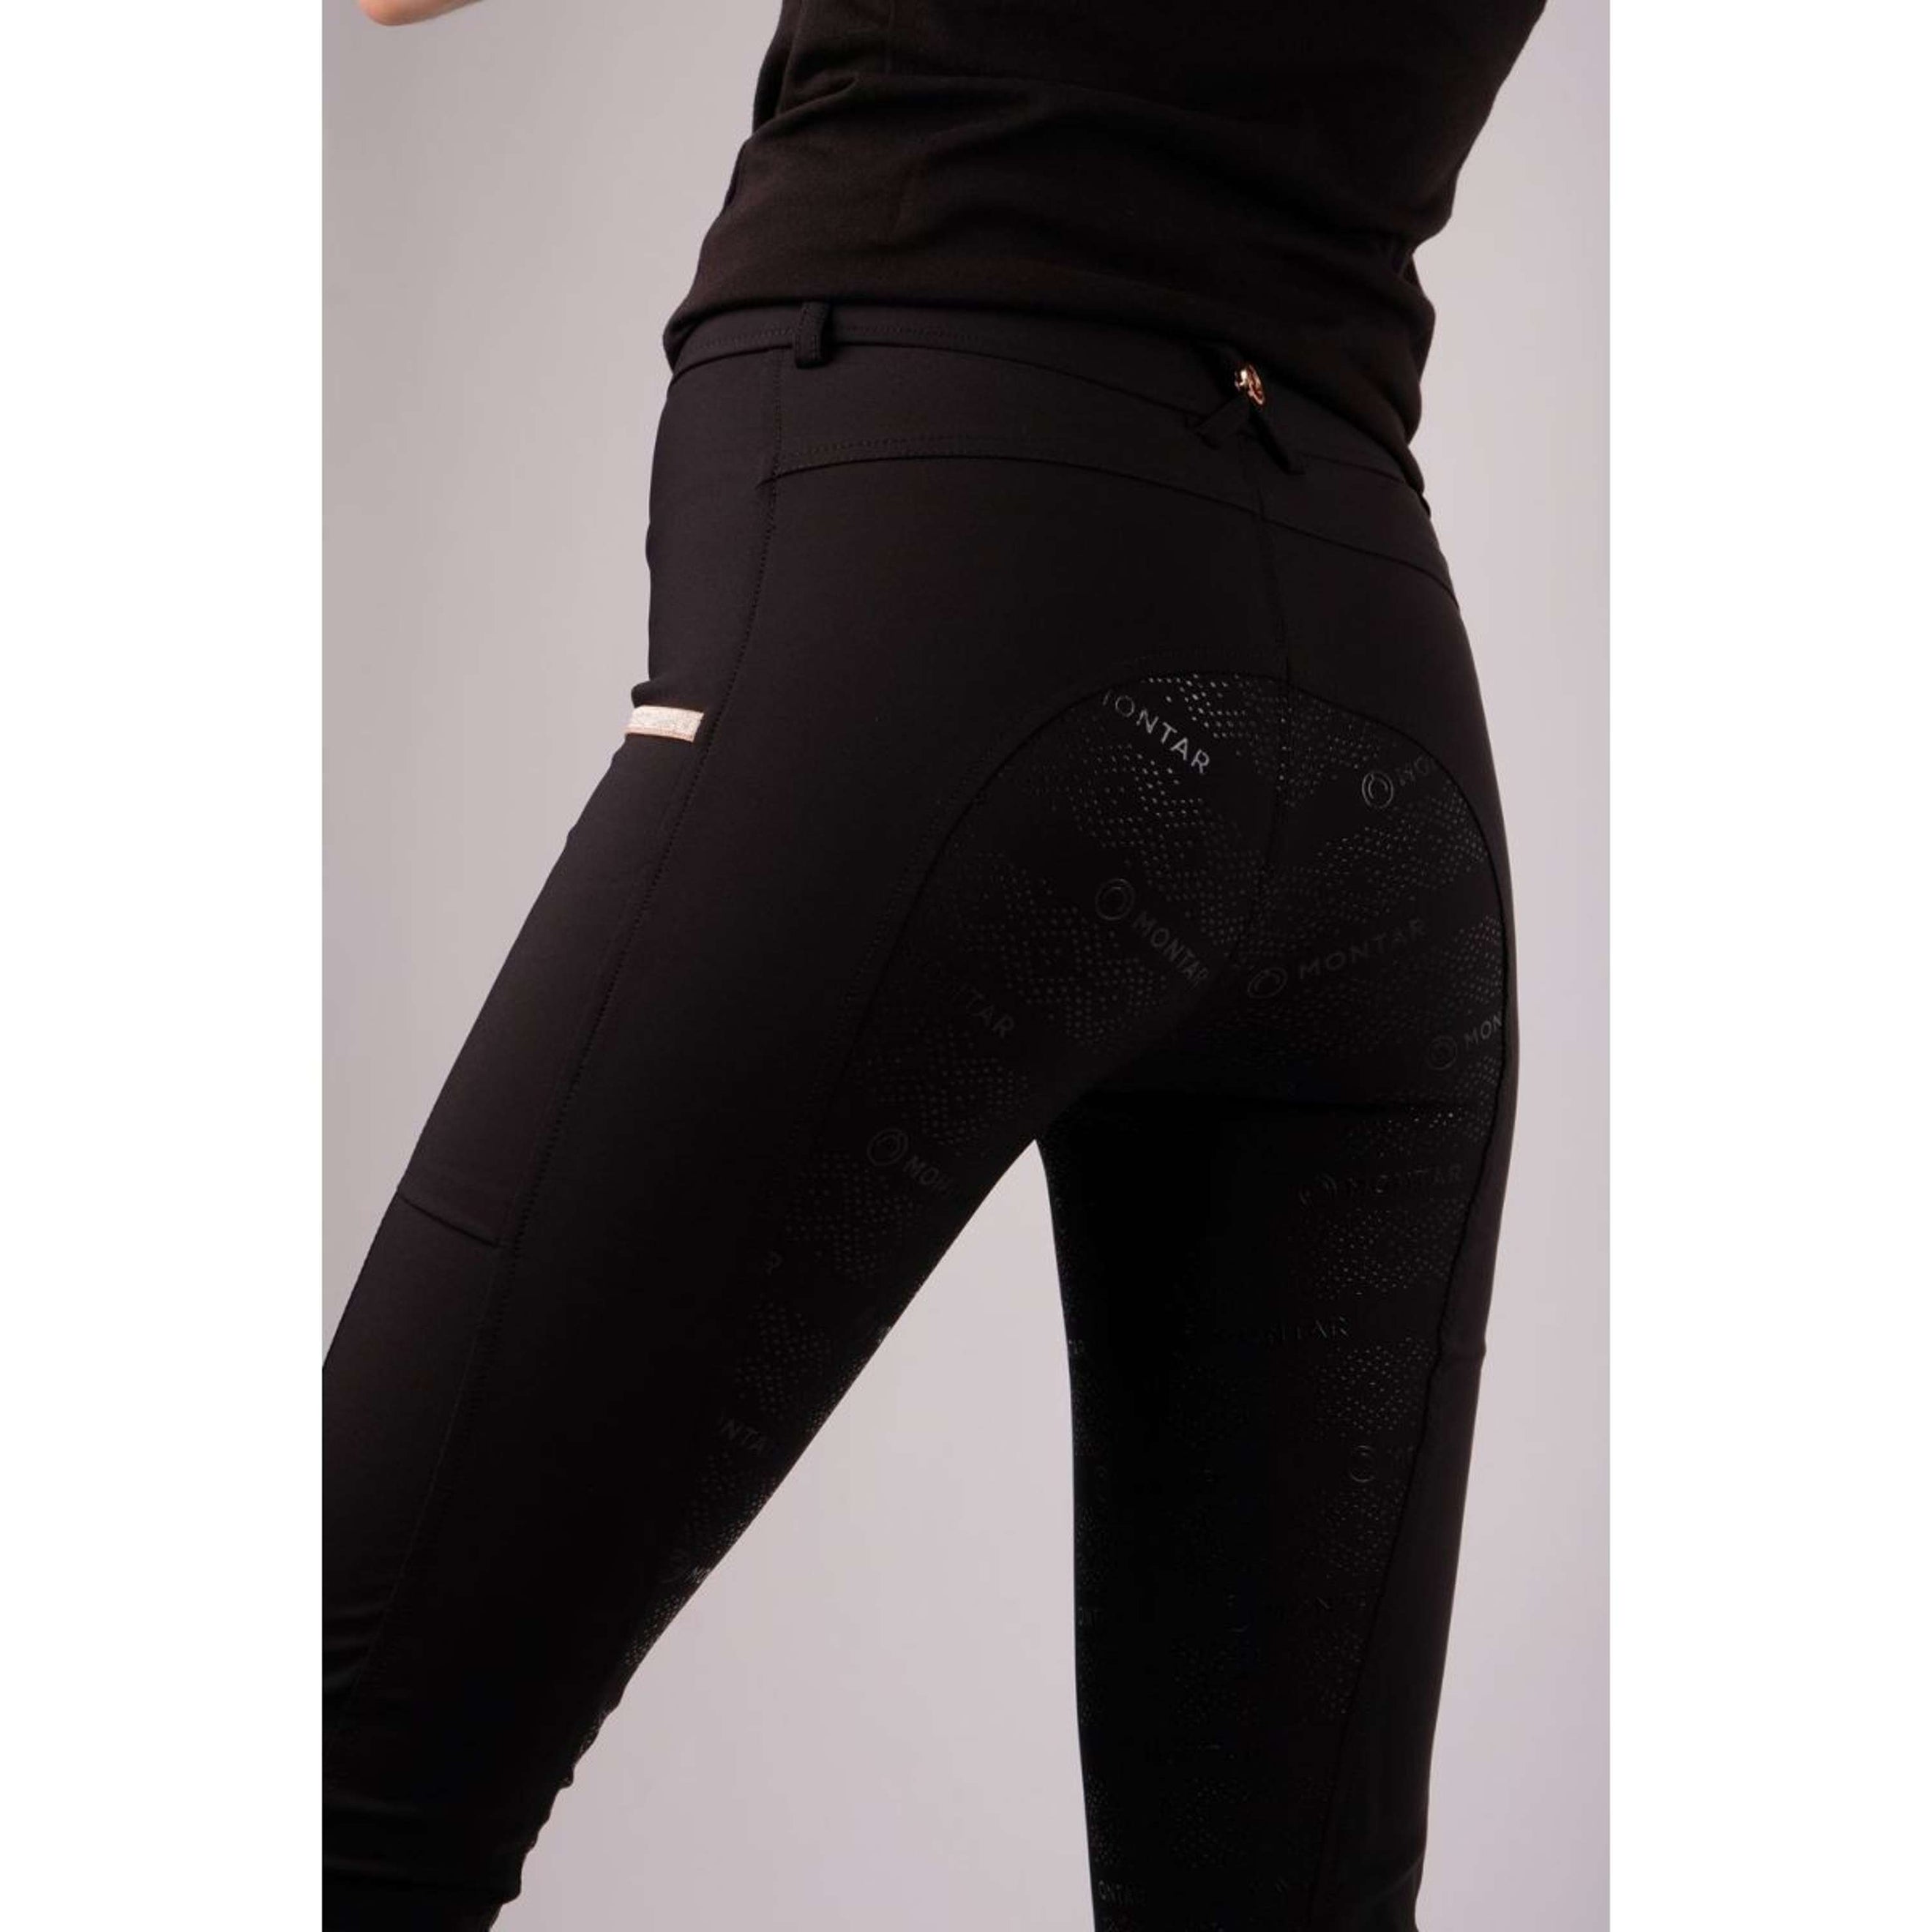 Montar Pantalon d'Équitation Millie Rosegold Full Grip Noir